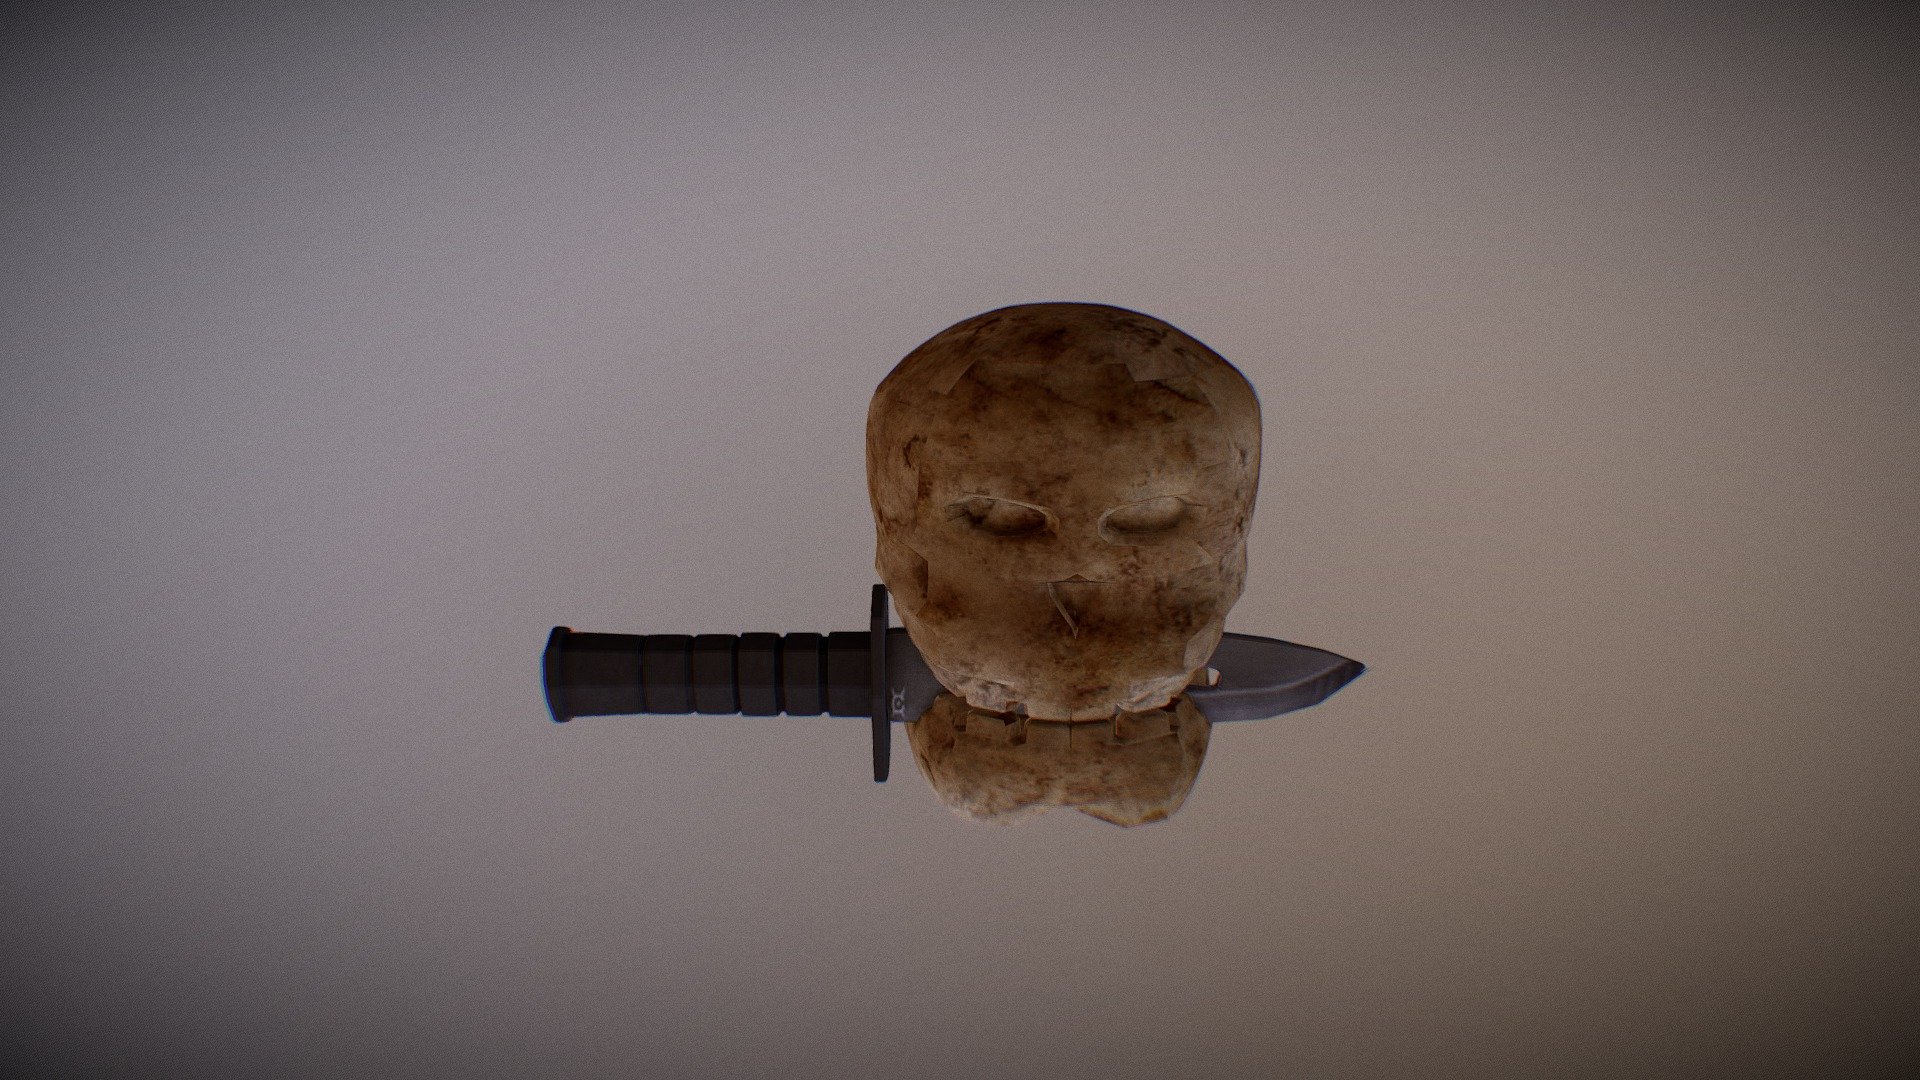 KNIFE IN SKULL / FACA NA CAVEIRA [3D MODEL]